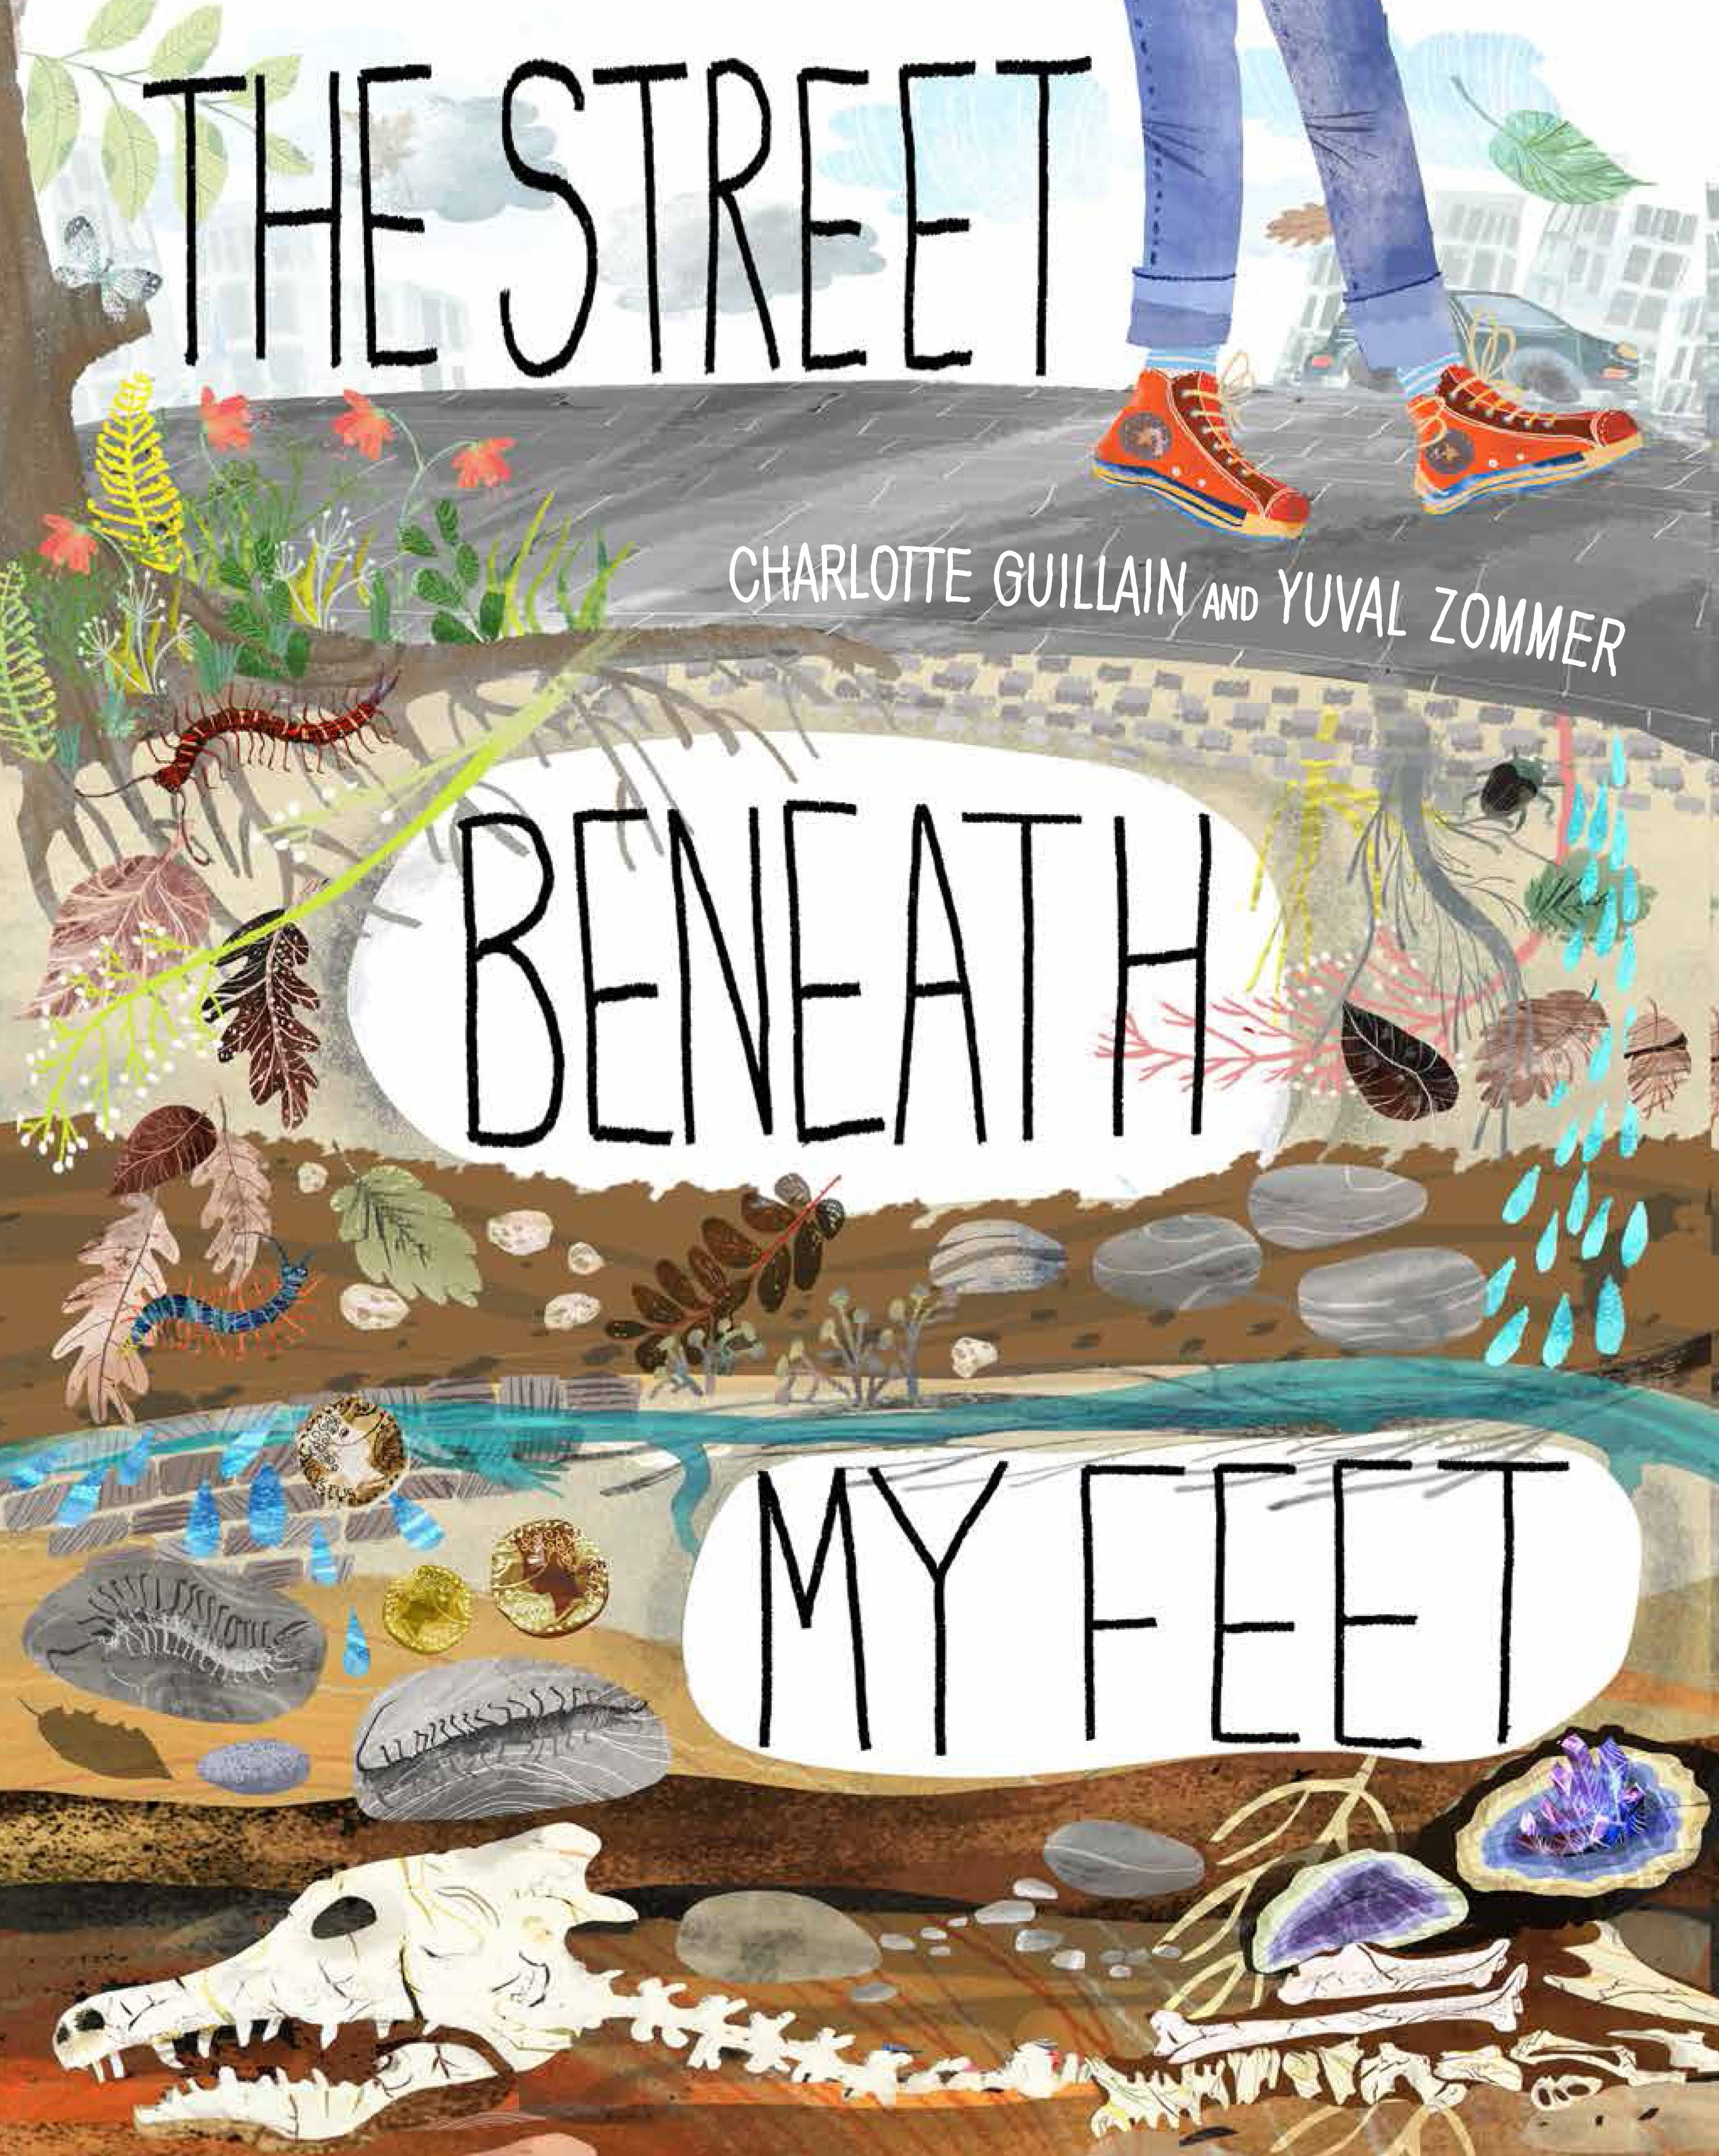 The Street Beneath My Feet - Charlotte Gullian